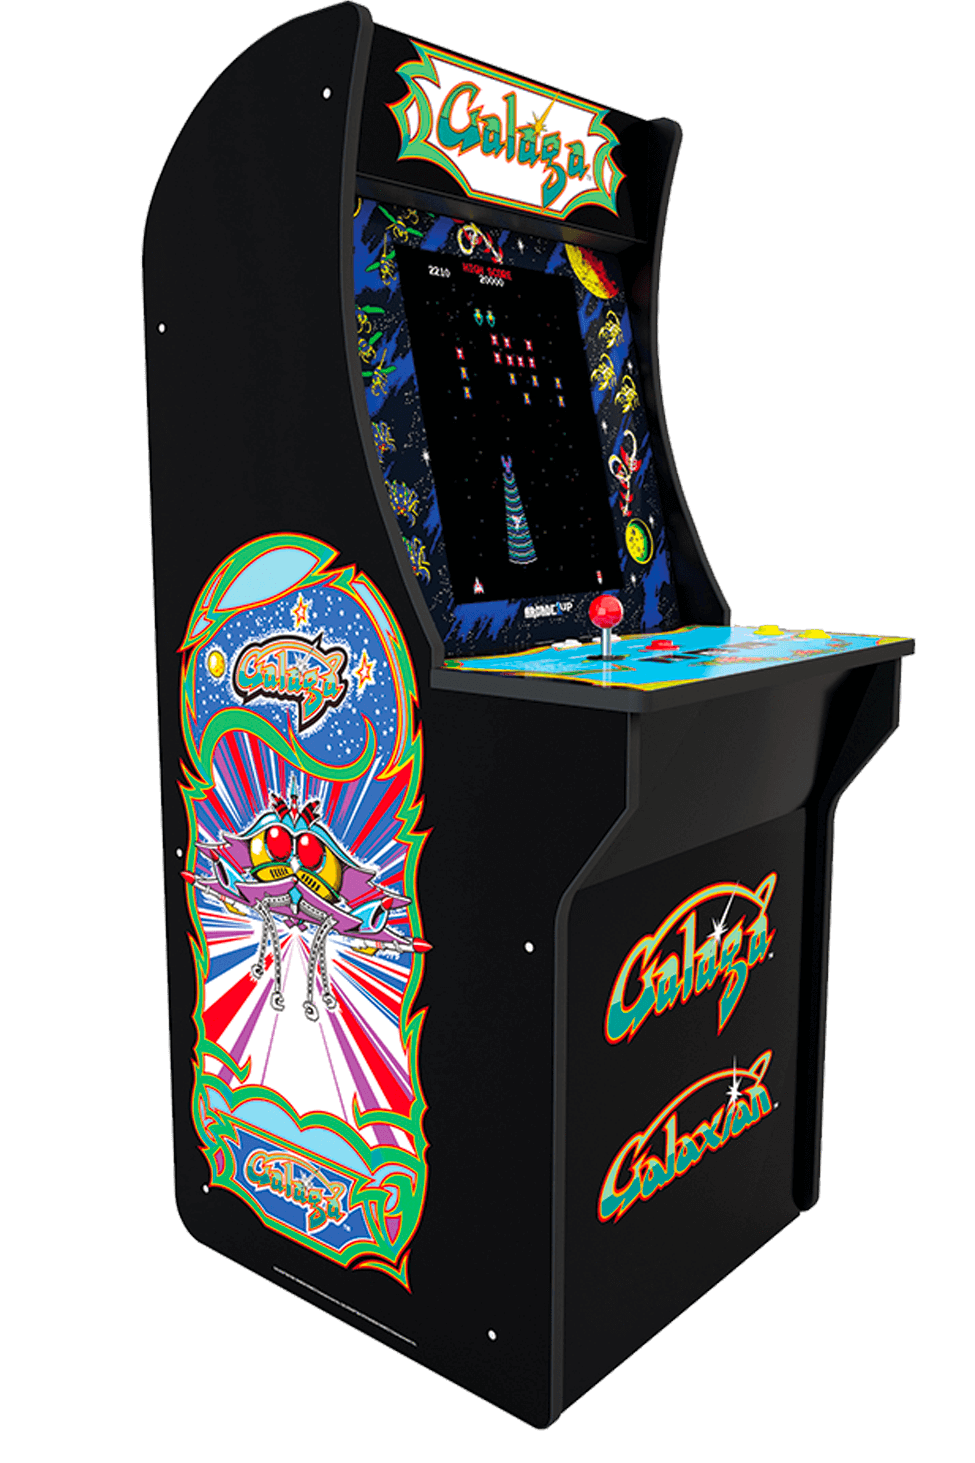 Galaga Arcade Game Rc 105 Carnivals